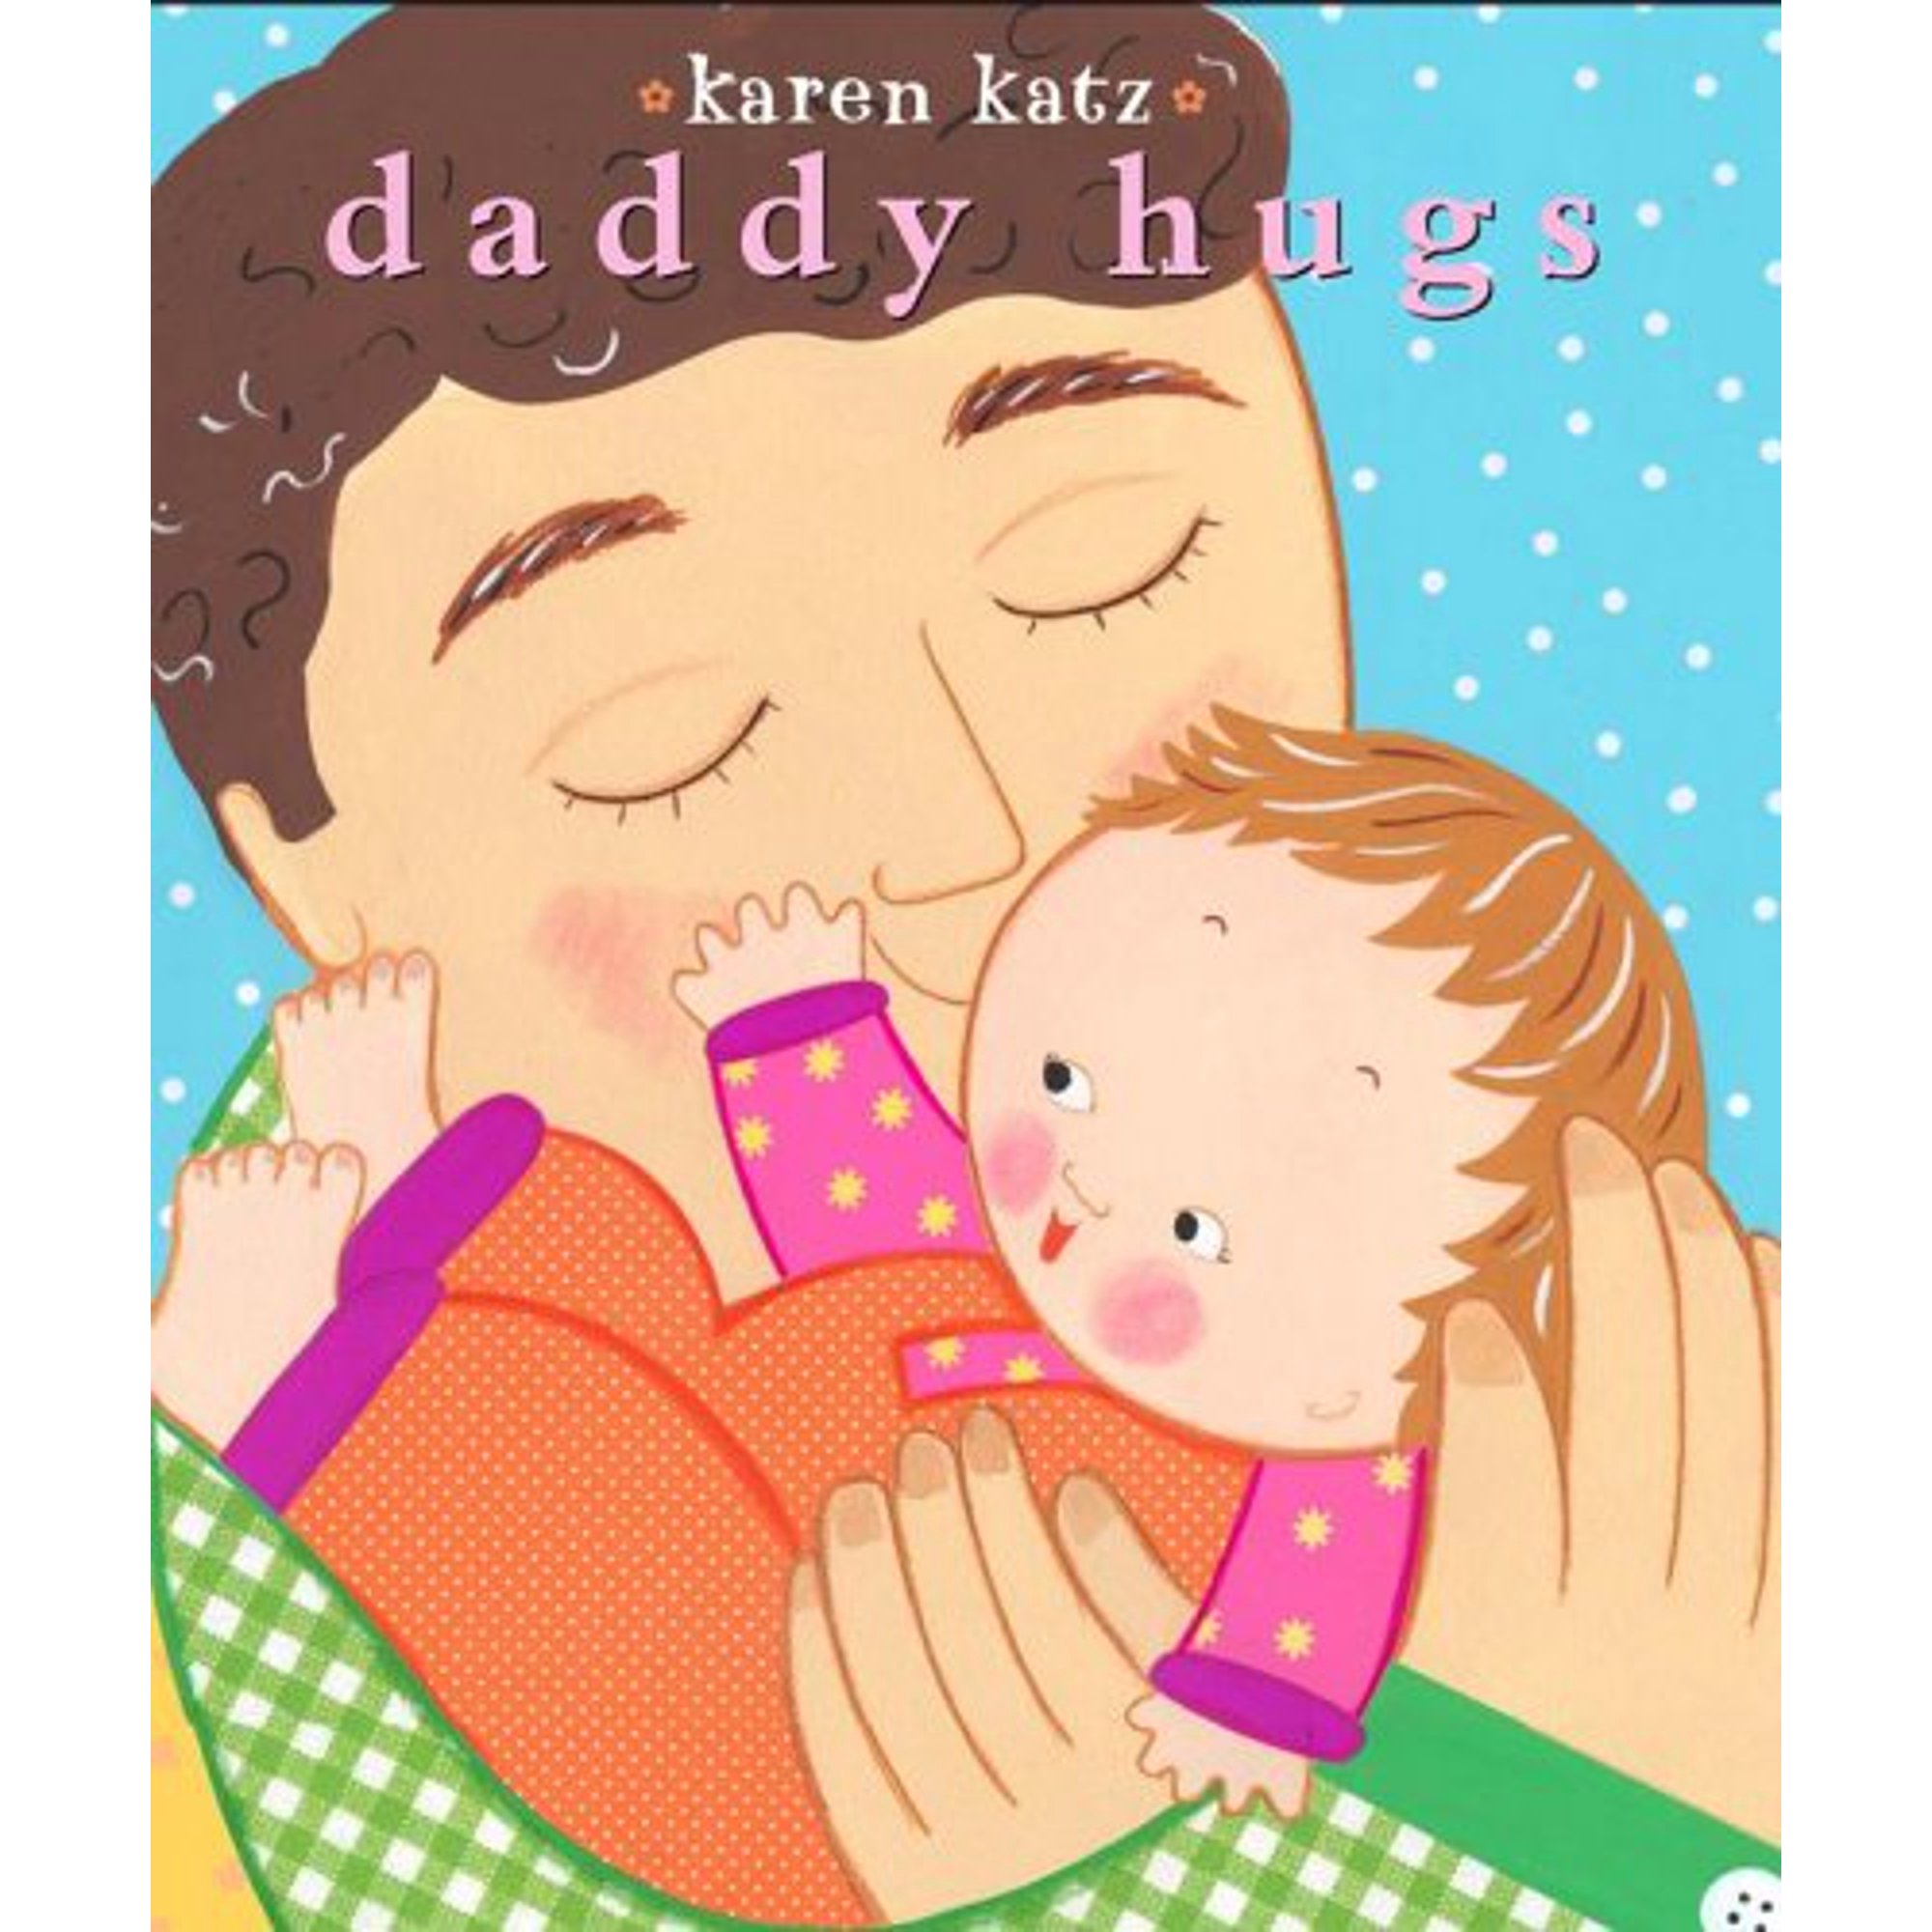 Daddy Hugs (Part of Classic Board Books) By Karen Katz | Walmart